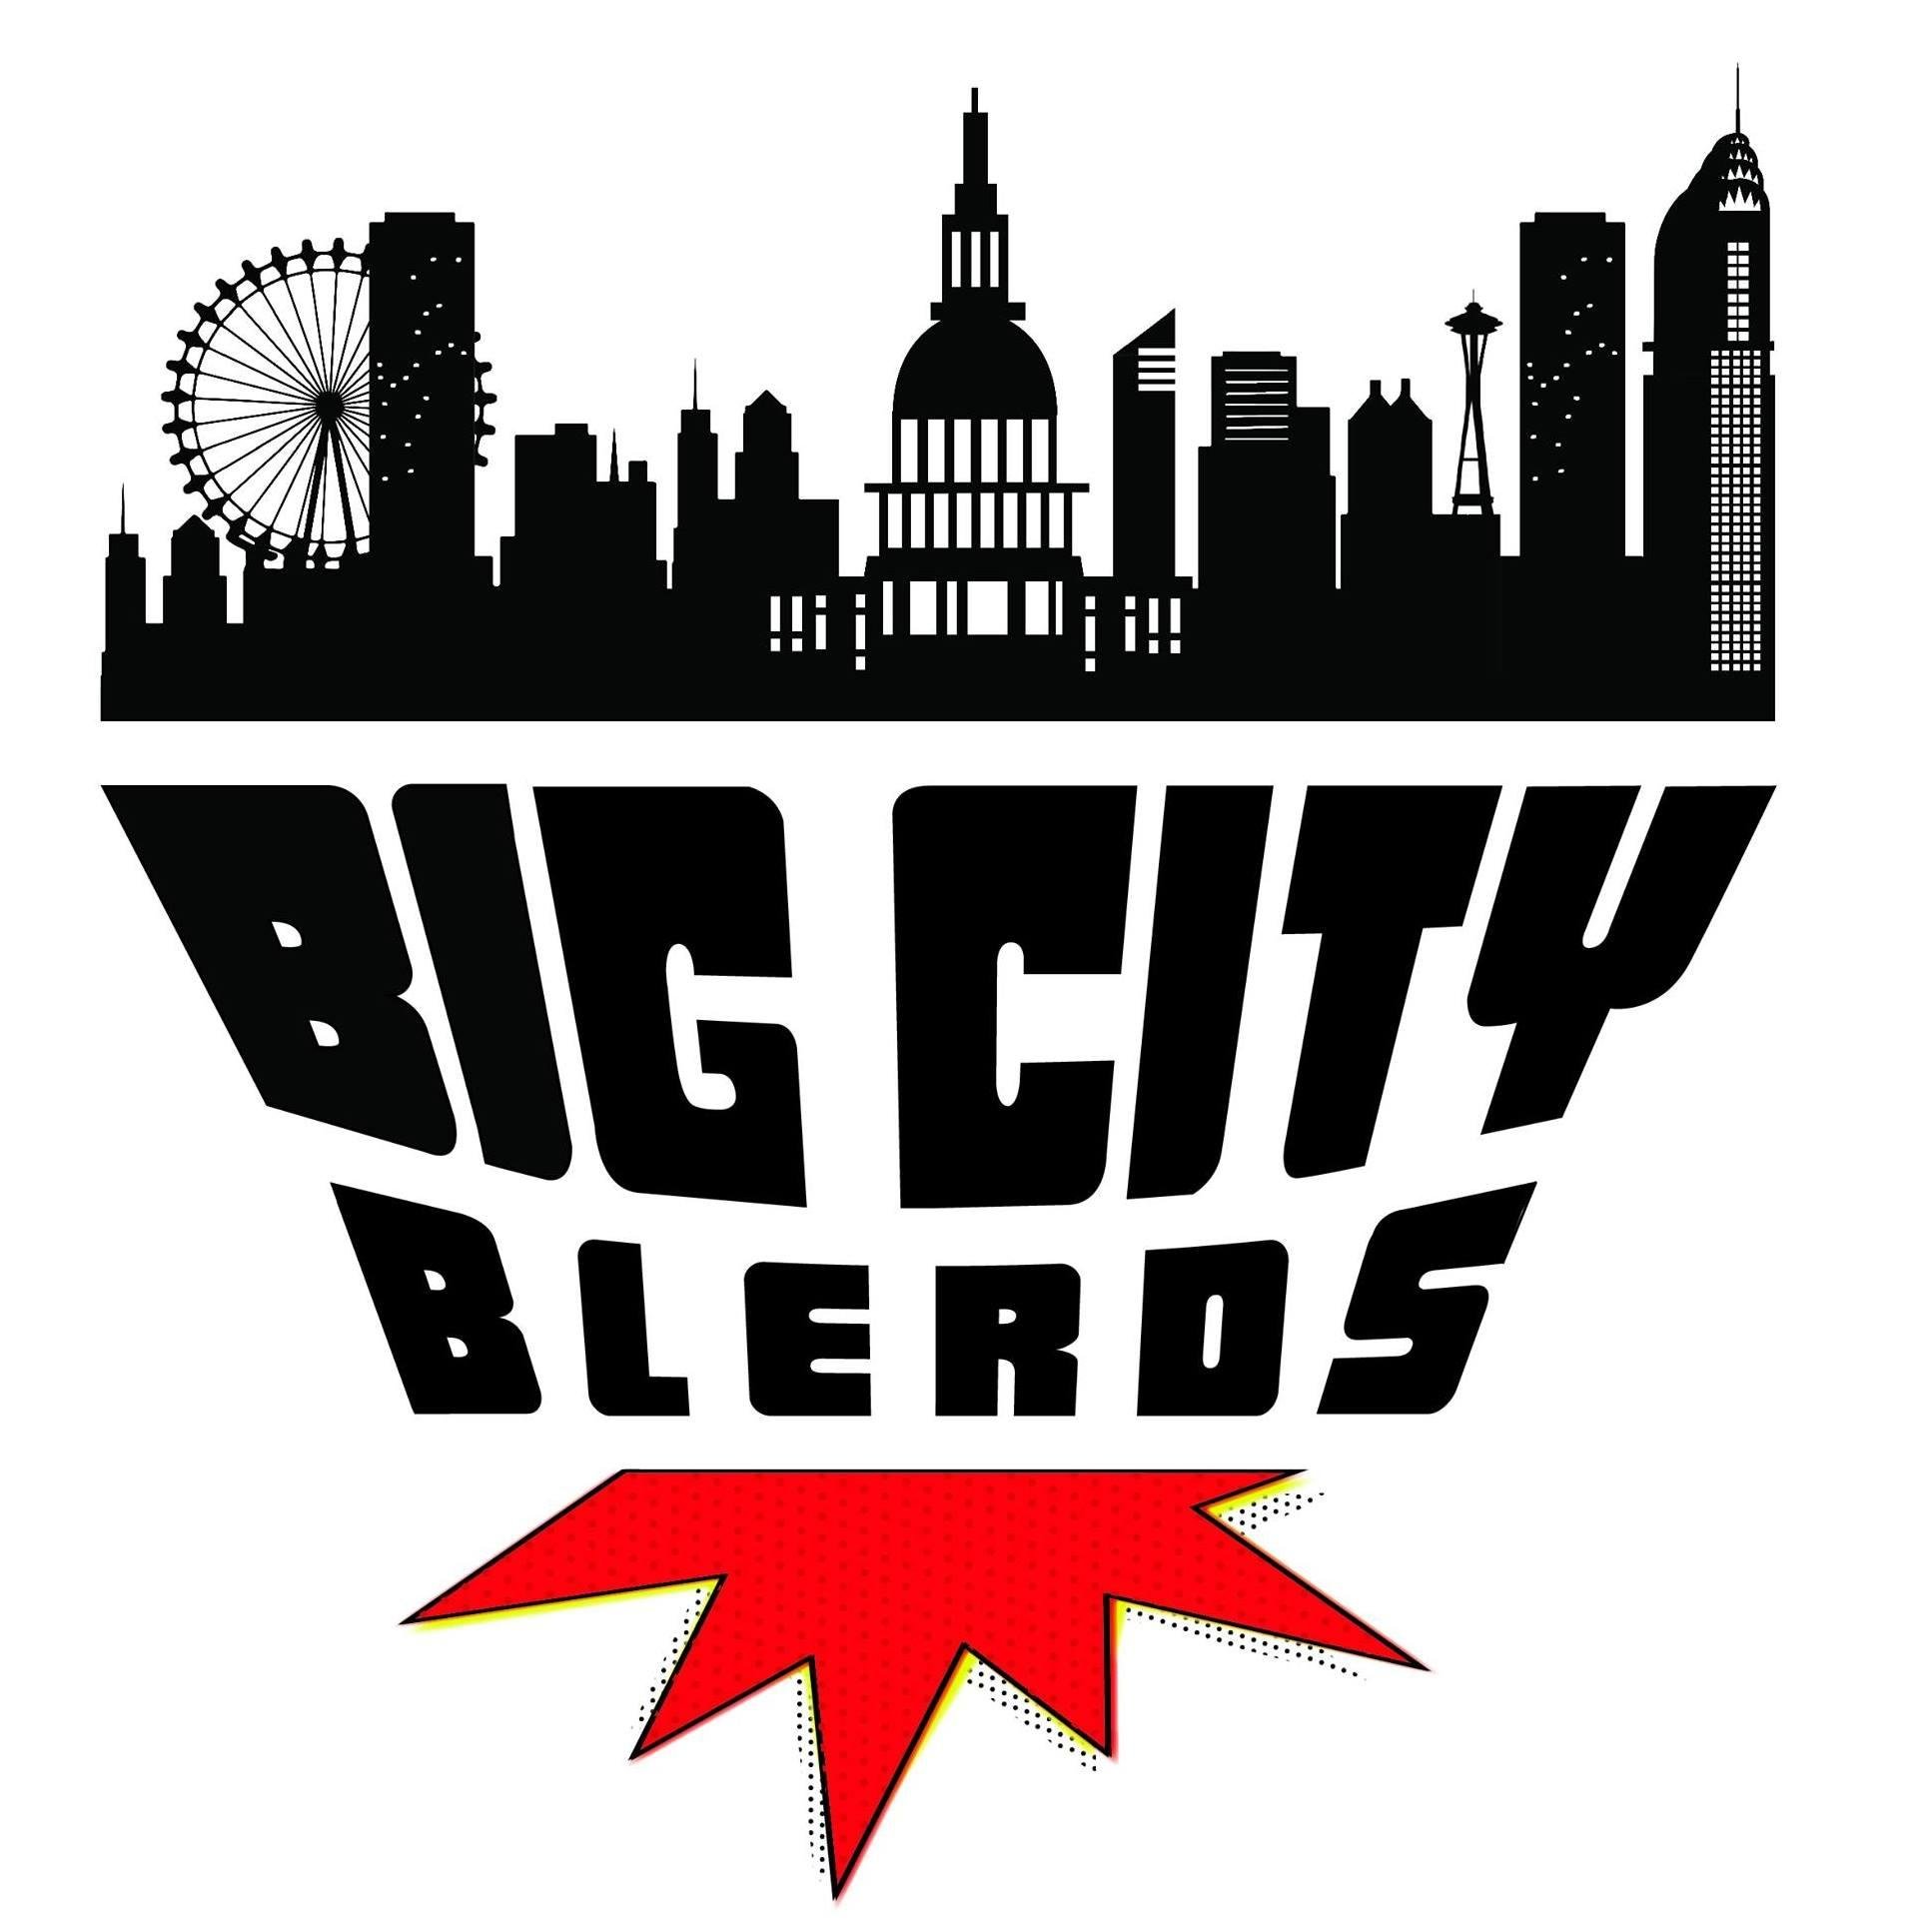 Celebrating the beauty & diversity of the #blerd community! #bigcityblerds
https://t.co/h3oxh28yxS